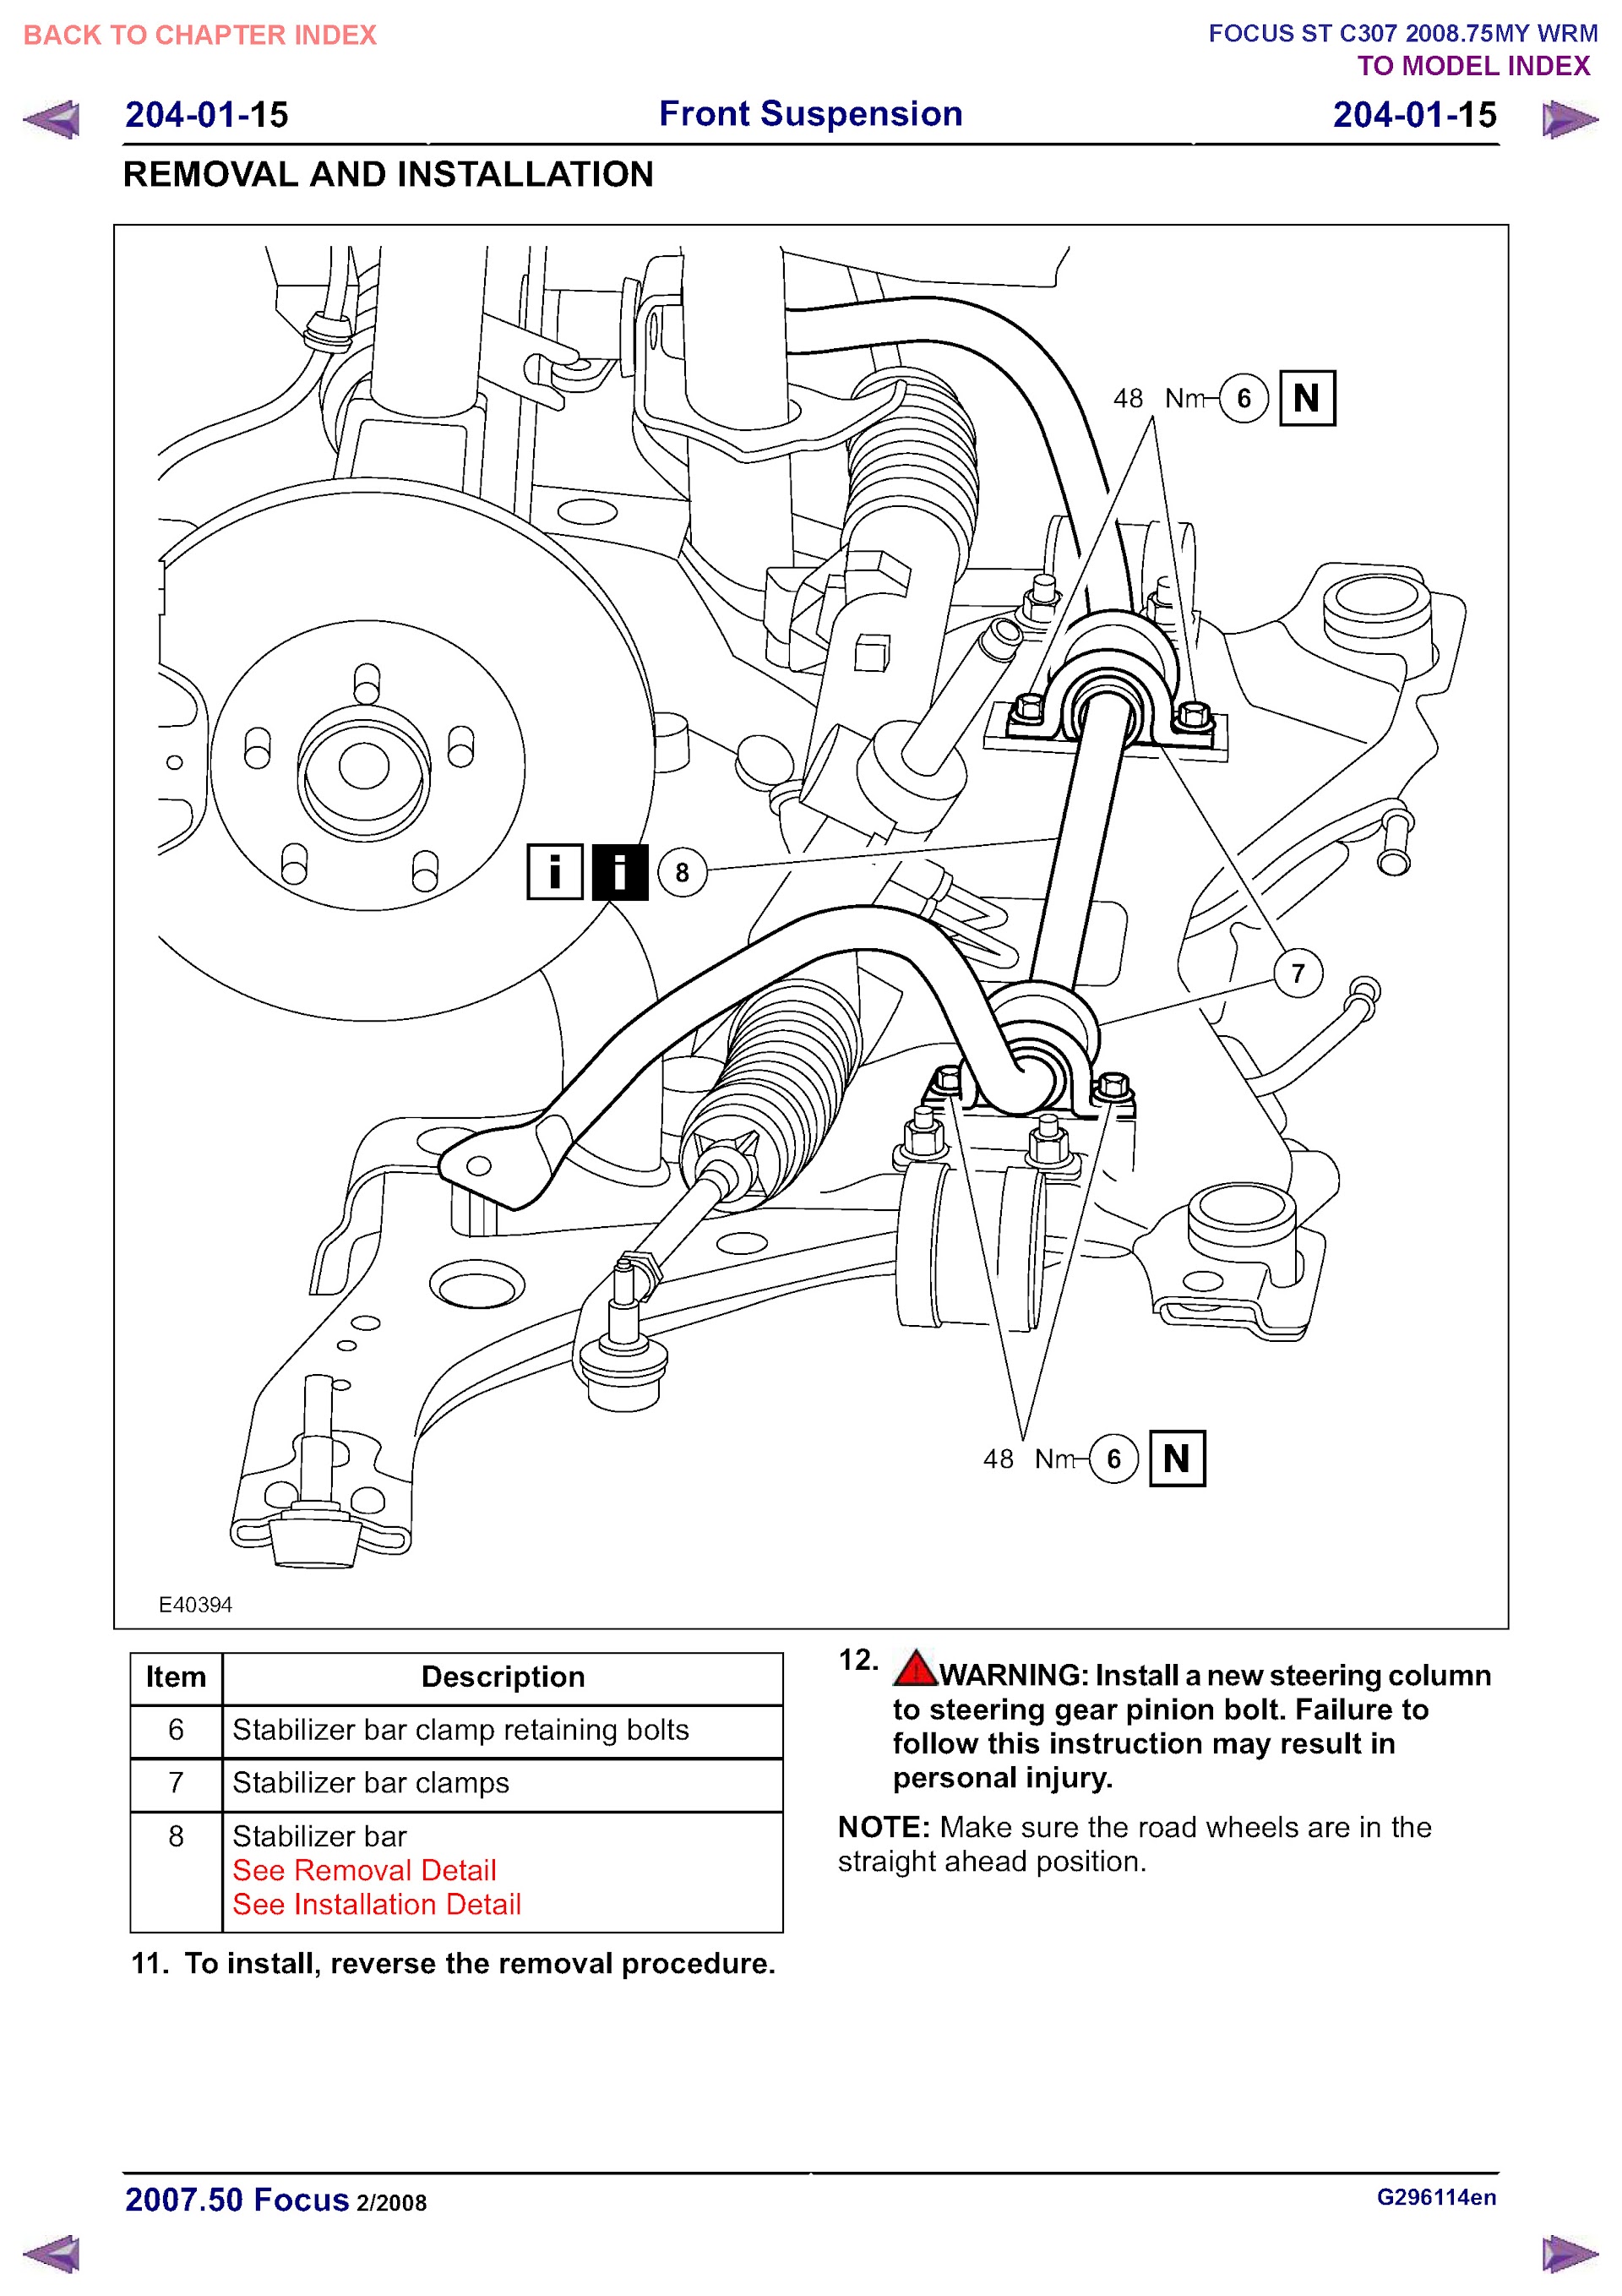 2011 Ford Focus Repair Manual Front Suspension